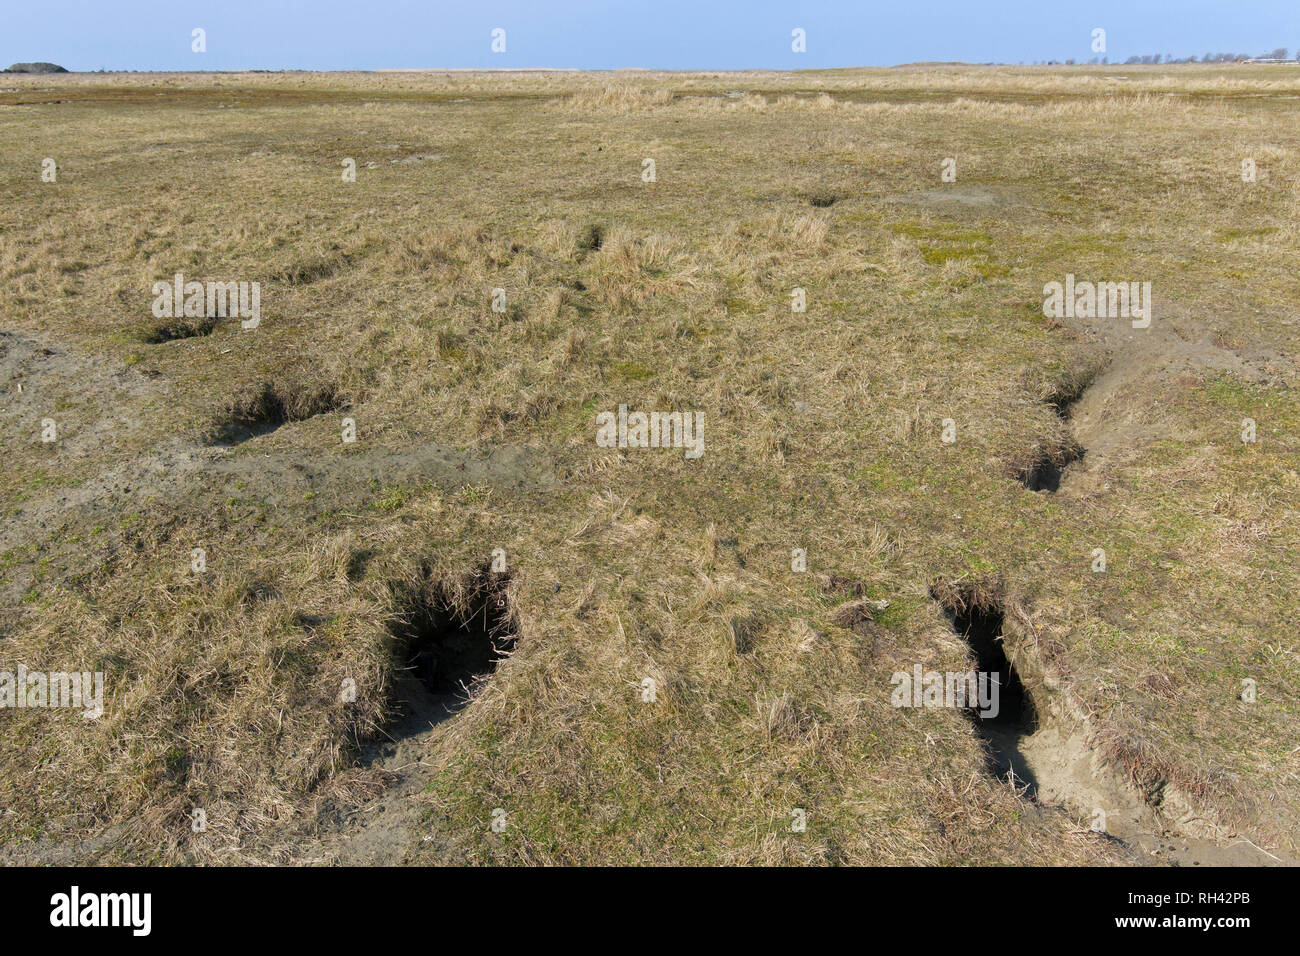 European rabbit (Oryctolagus cuniculus) entrances to burrow / warren in grassland Stock Photo